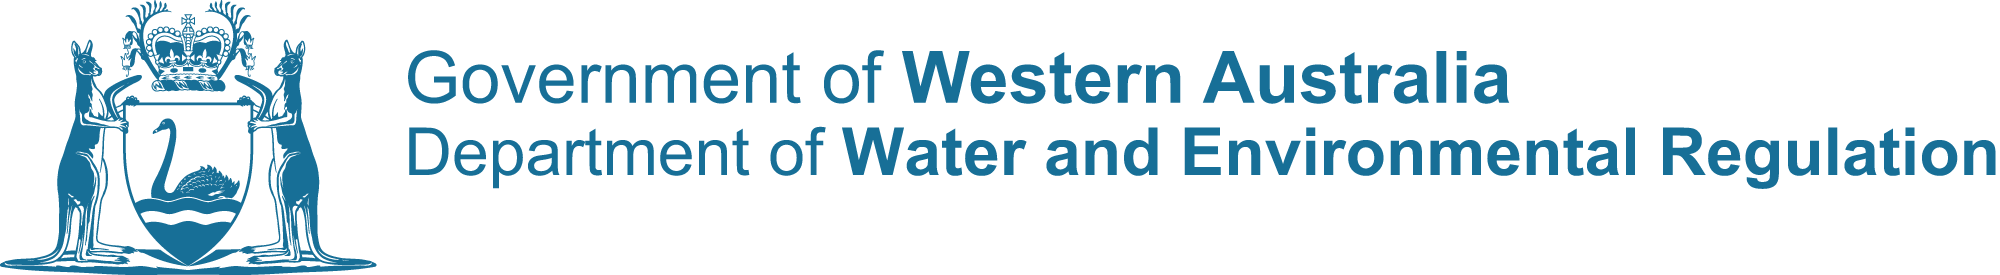 WA Department of Water and Environmental Regulation